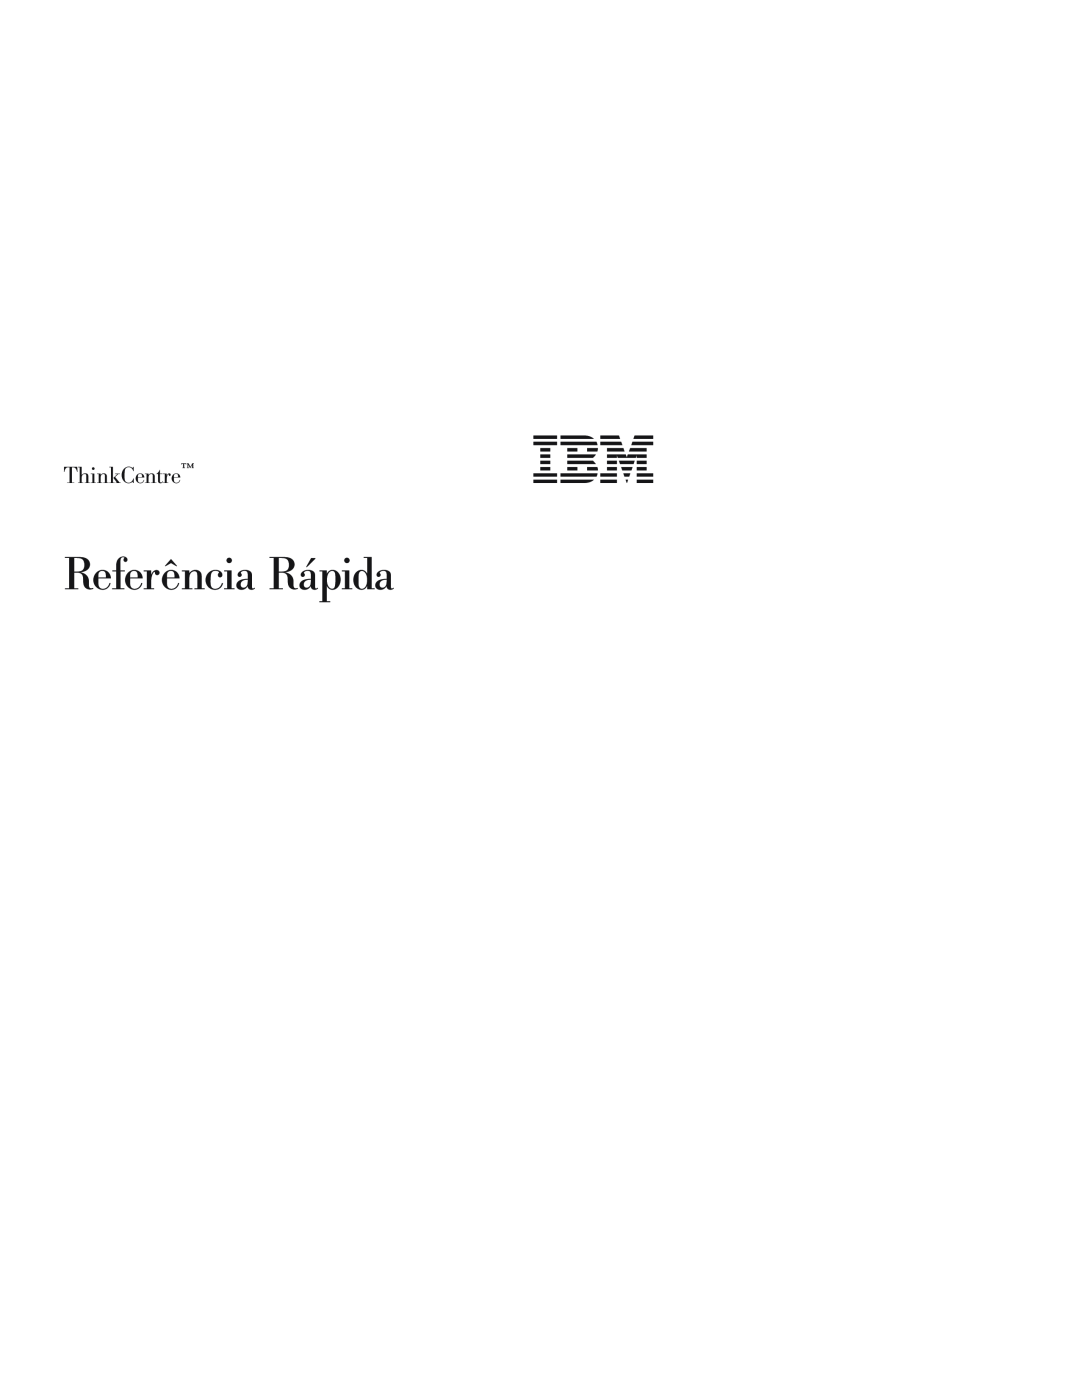 IBM Personal Computer manual Referência Rápida, ThinkCentre 